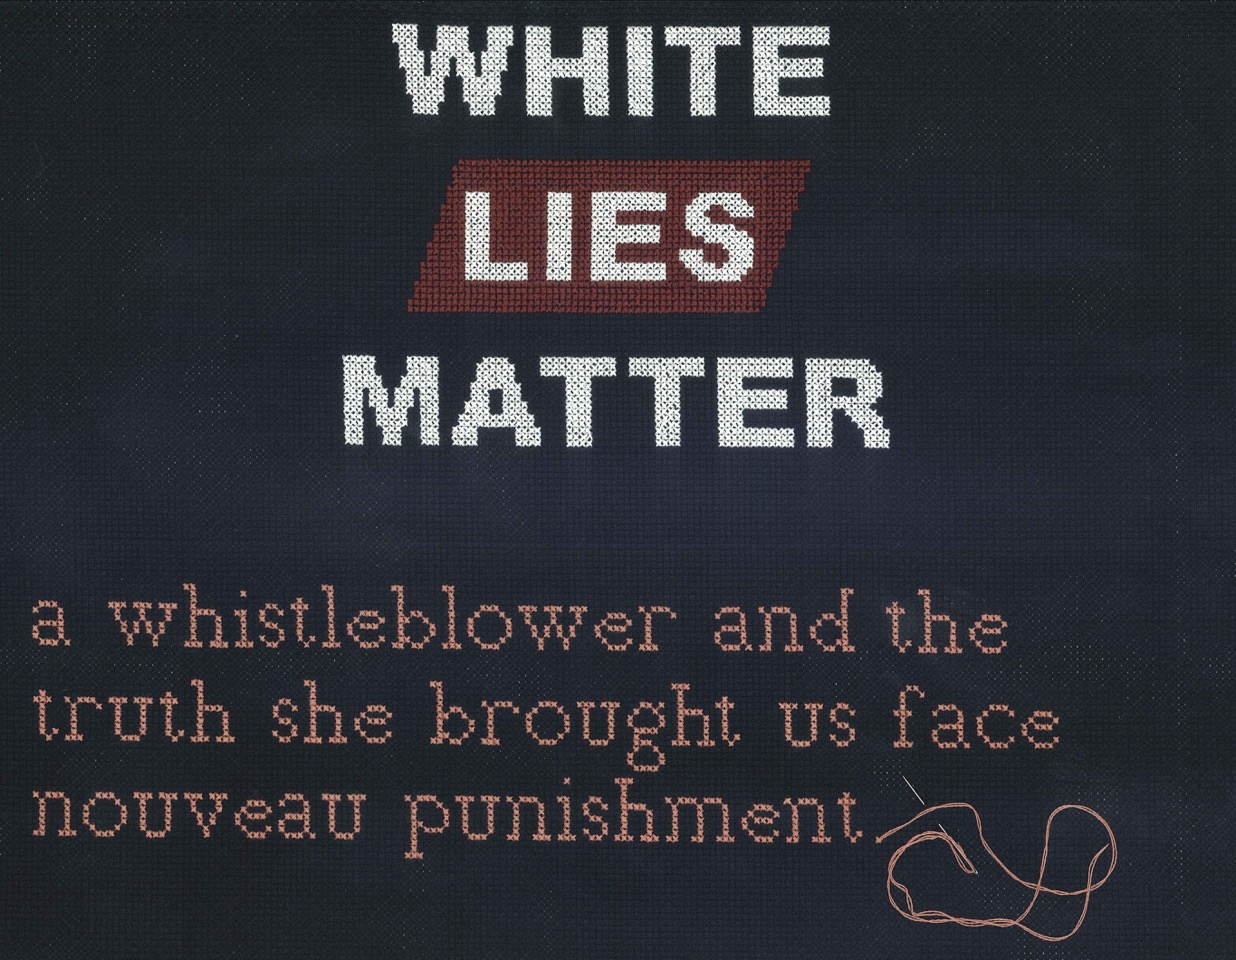 White Lies Matter (1)